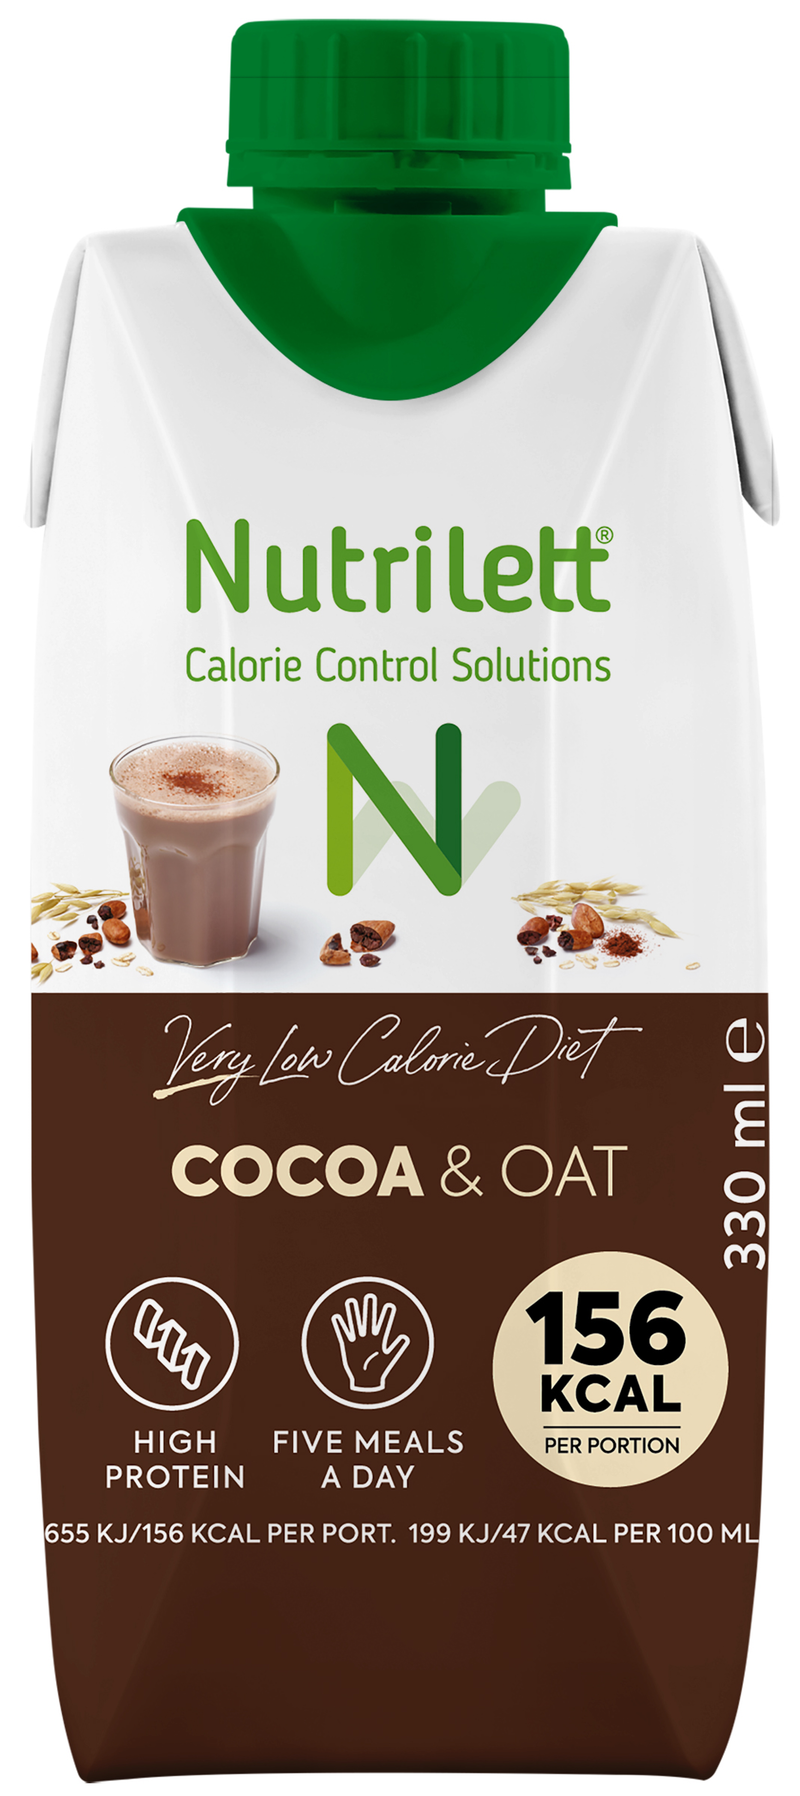 Nutrilett Cocoa & Oat Pirtelö 12-pack - Kevytkauppa.fi